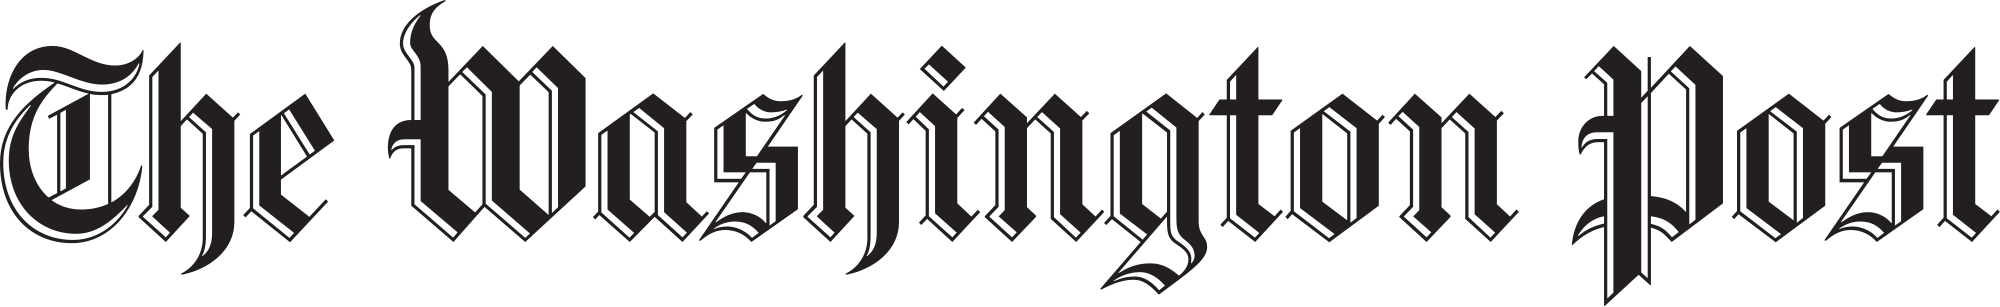 2000px-The_Logo_of_The_Washington_Post_Newspaper.svg_